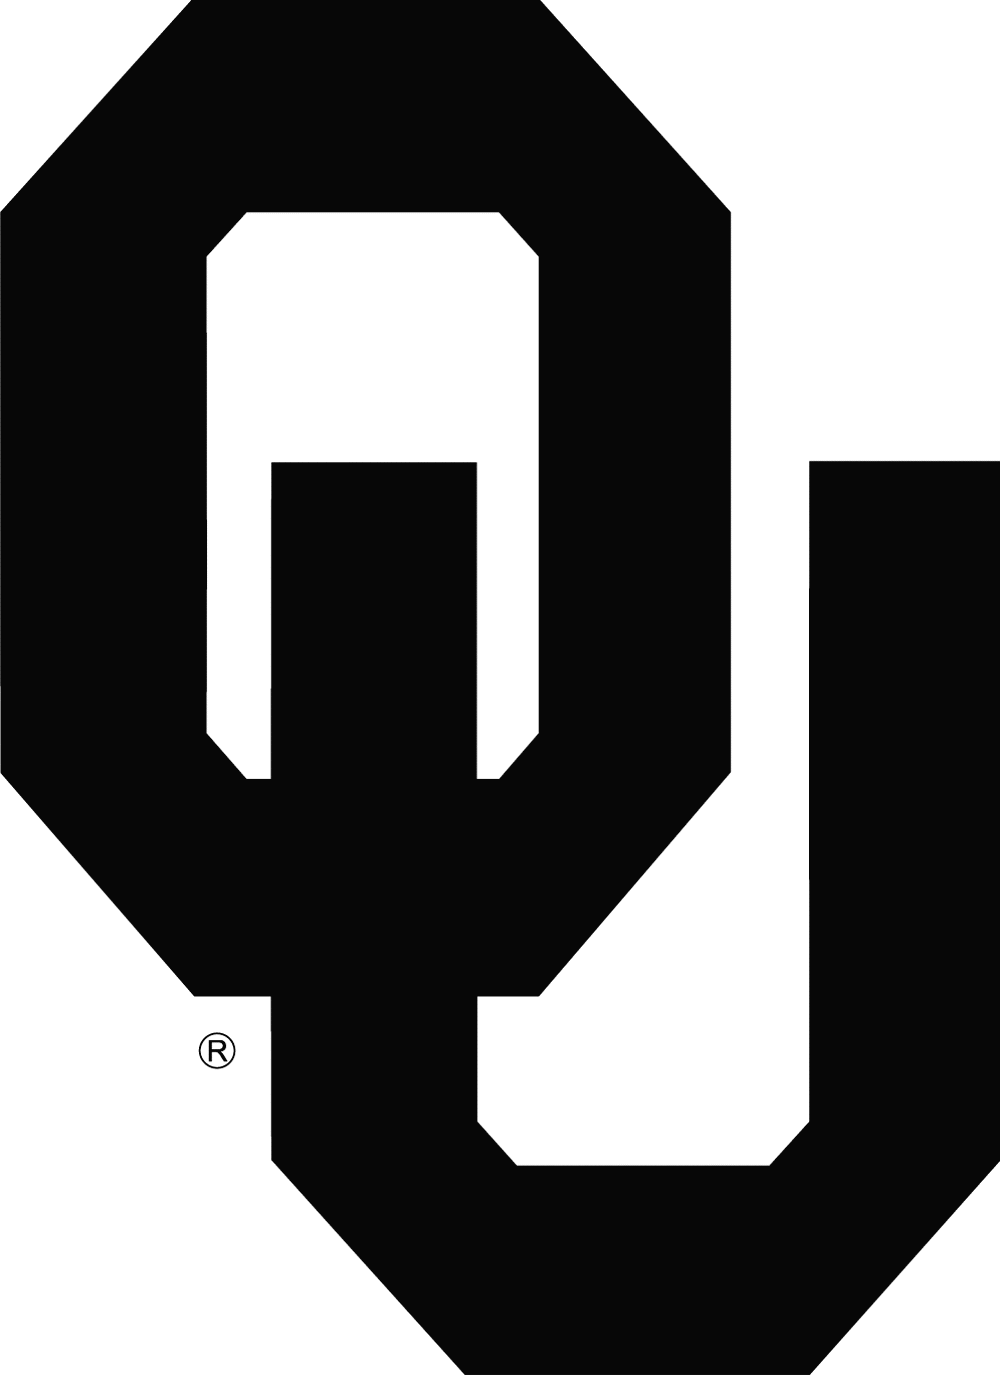 Oklahoma S Official Logo Is Also Available Asvector Artwork  Eps Files